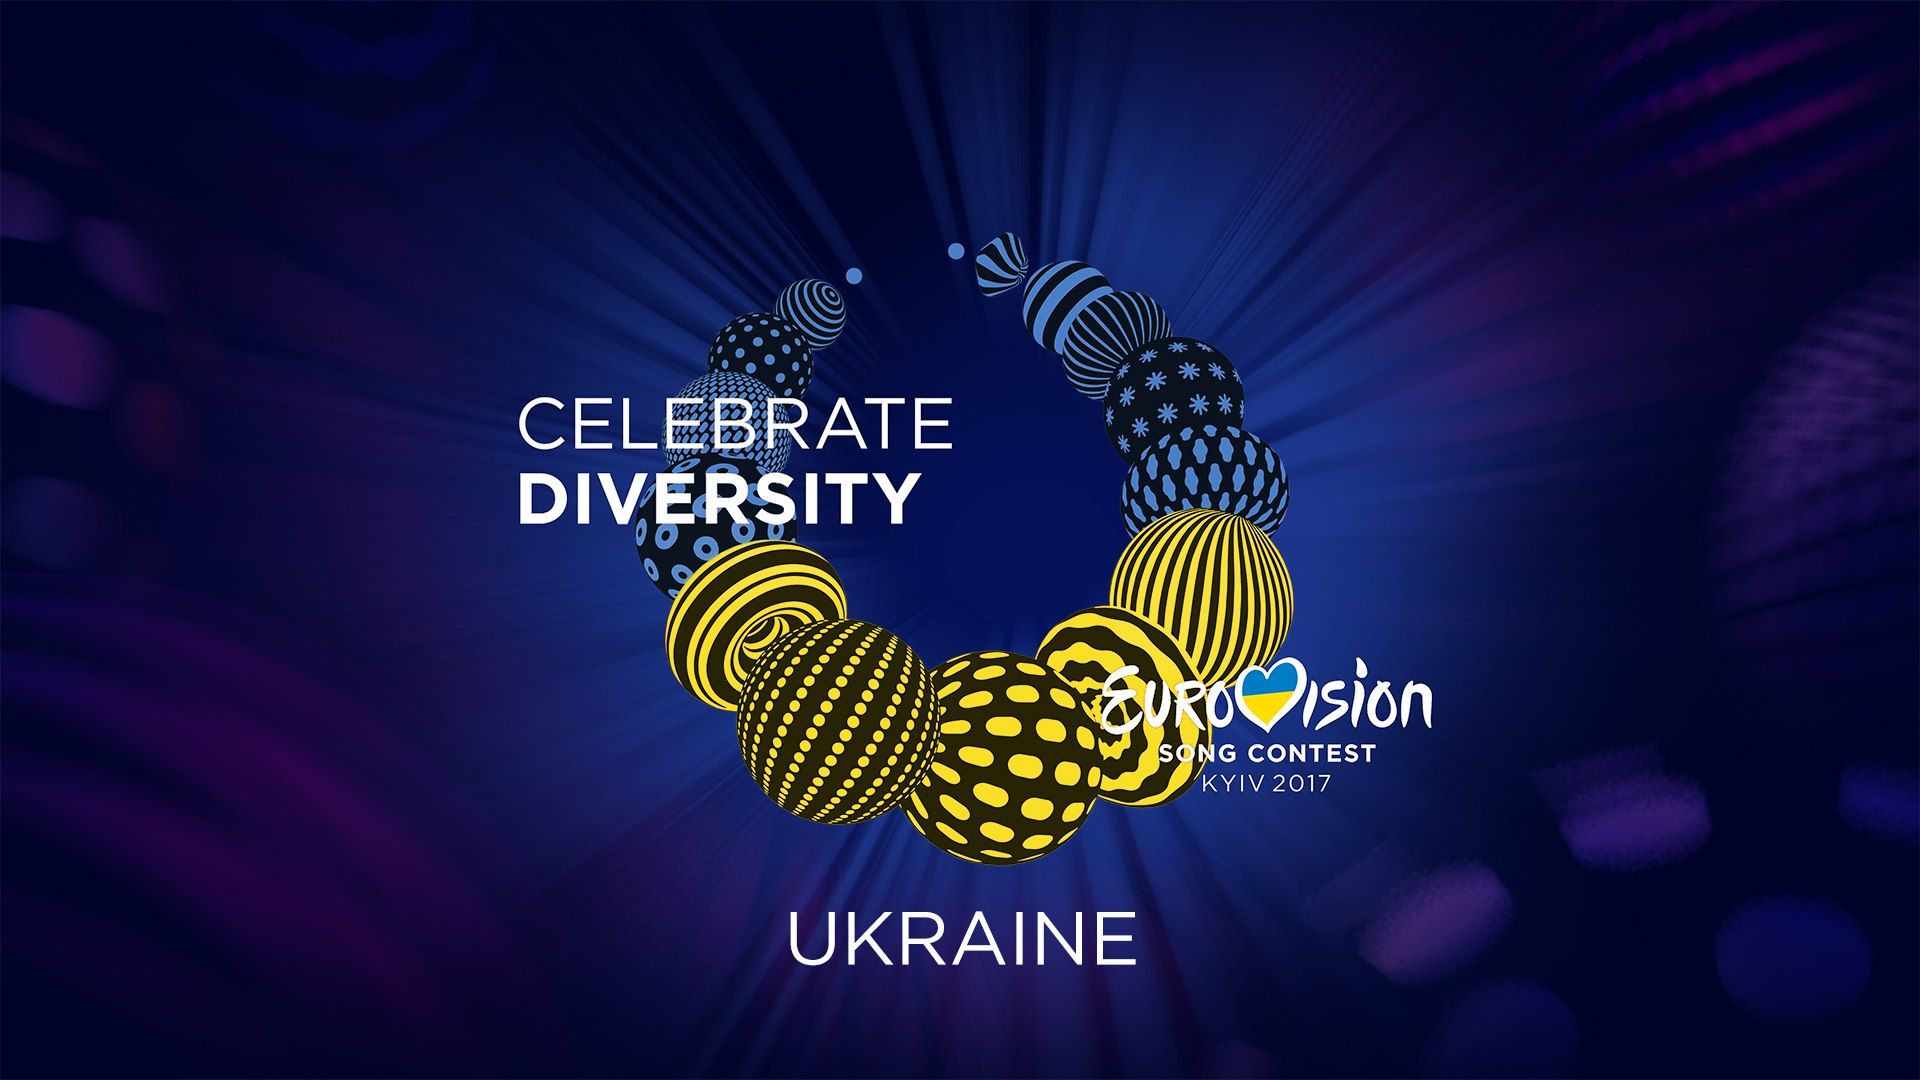 Logotipo del Festival de Eurovisión, fondos de pantalla e imágenes de Kiev 2017